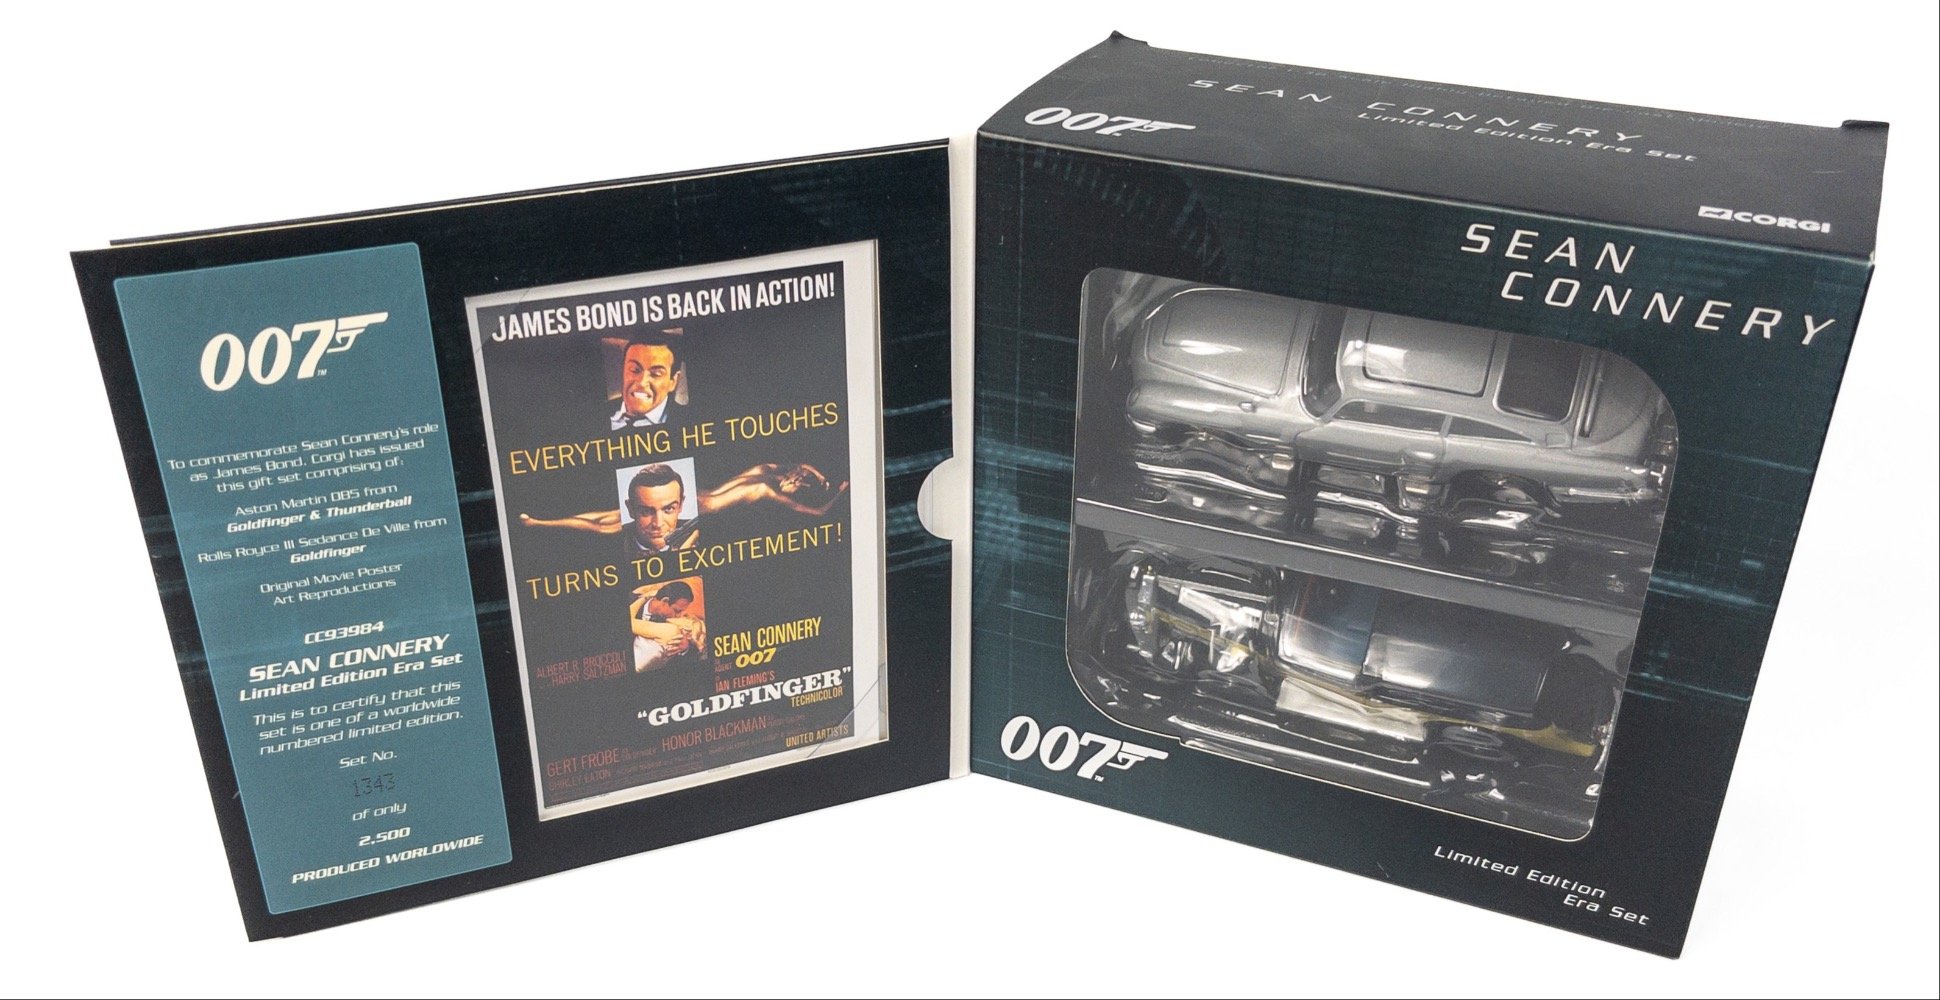 007 SEAN CONNERY Limited Edition Era Set No 1343 of 2500 produced WORLDWIDE Ltd Edition by Corgi - - Bild 3 aus 3